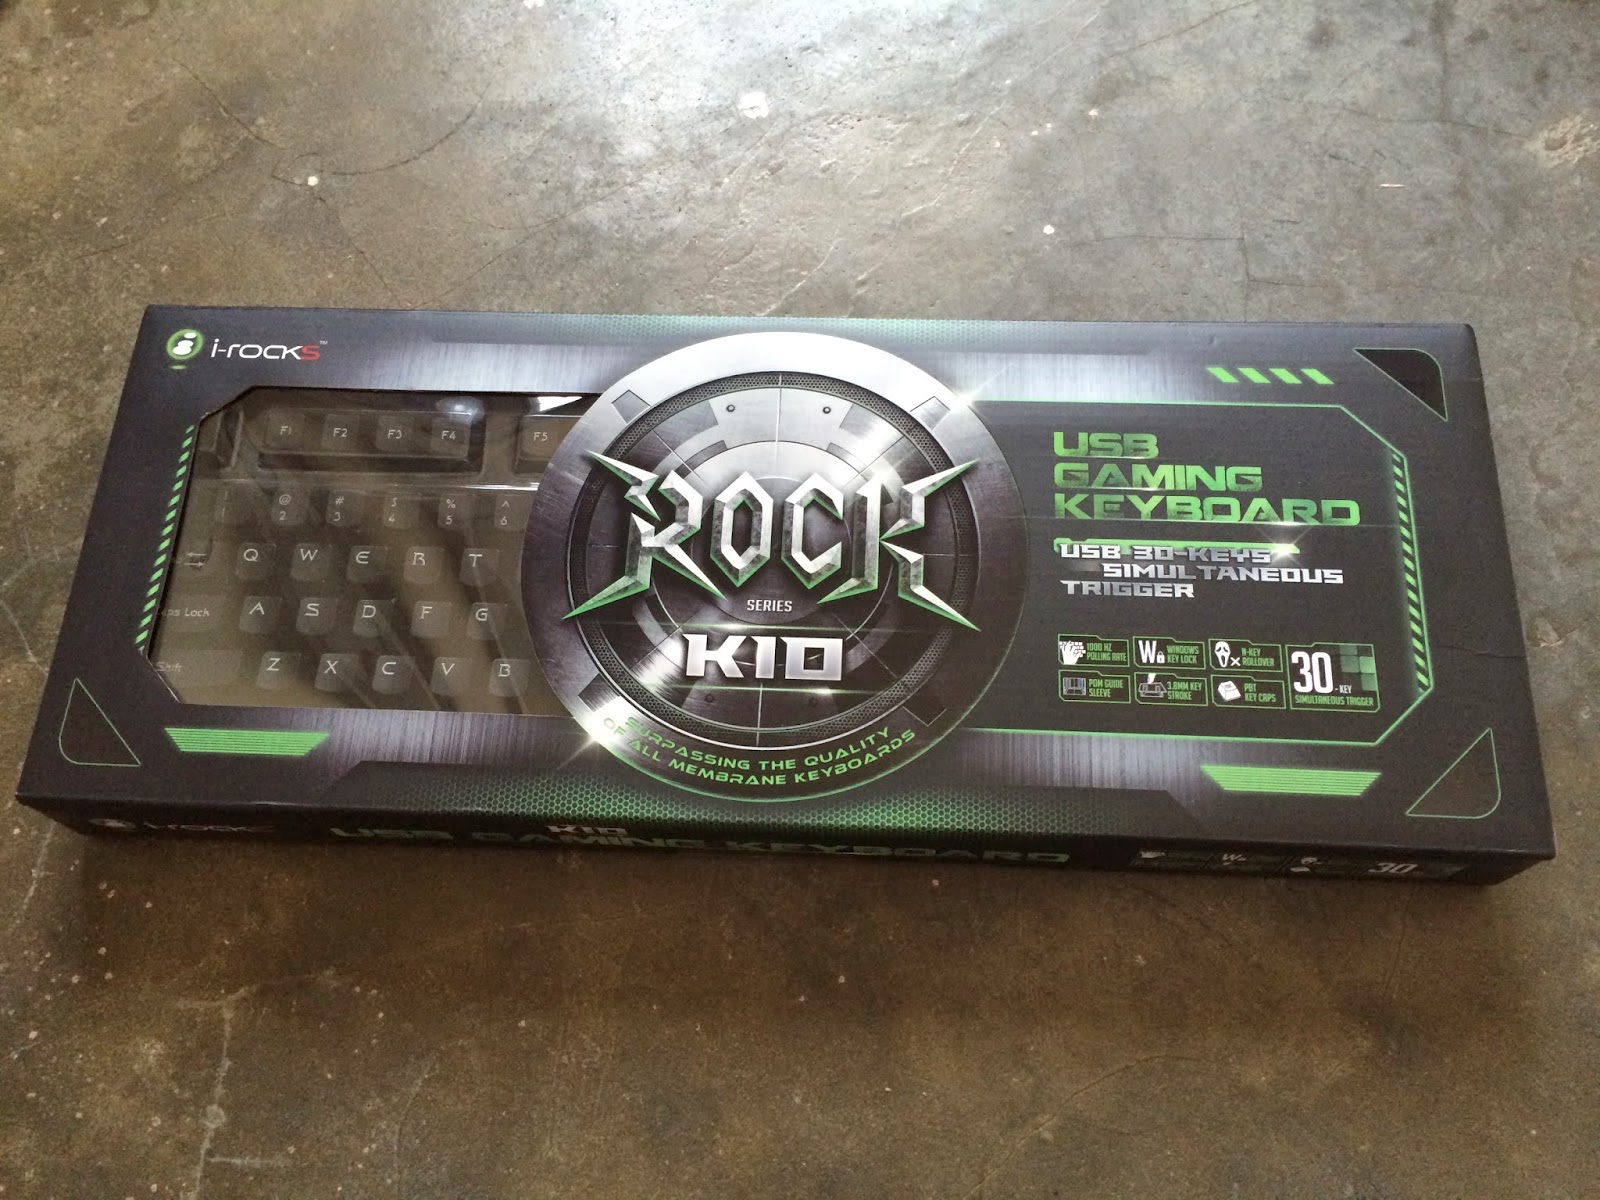 Unboxing & Review: i-Rocks K10 Gaming Keyboard 4